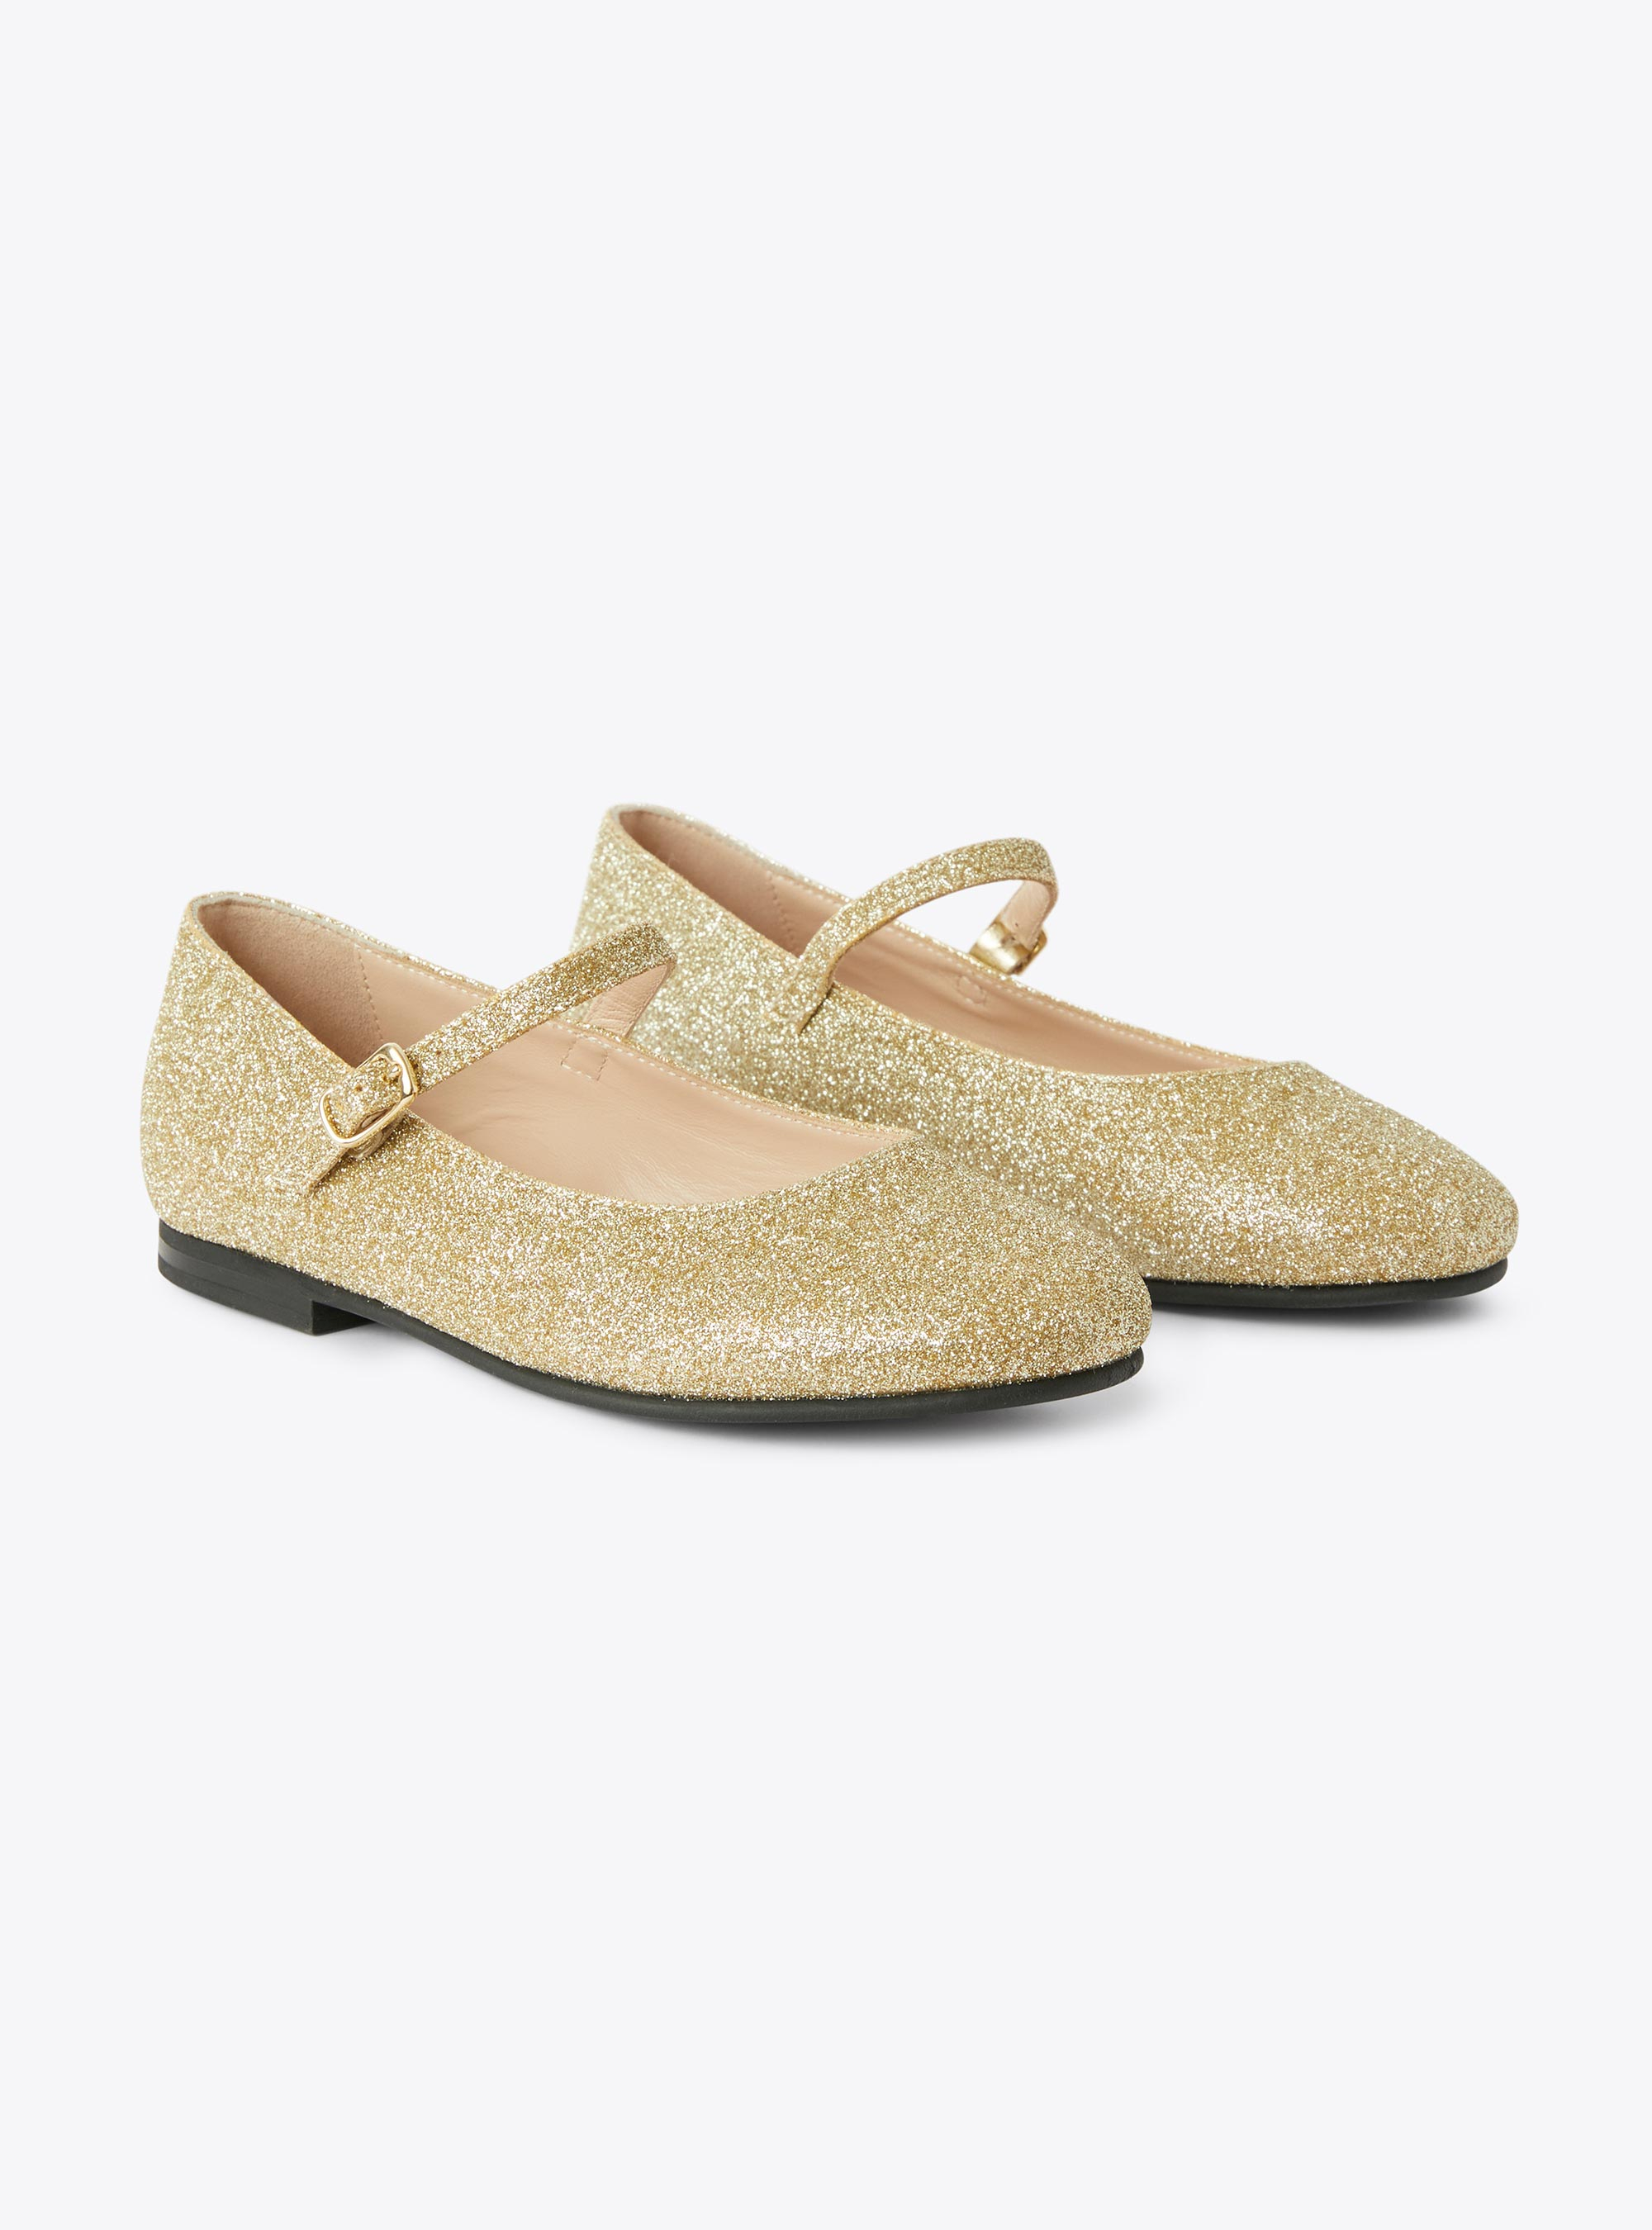 Glitter ballet flats - Shoes - Il Gufo